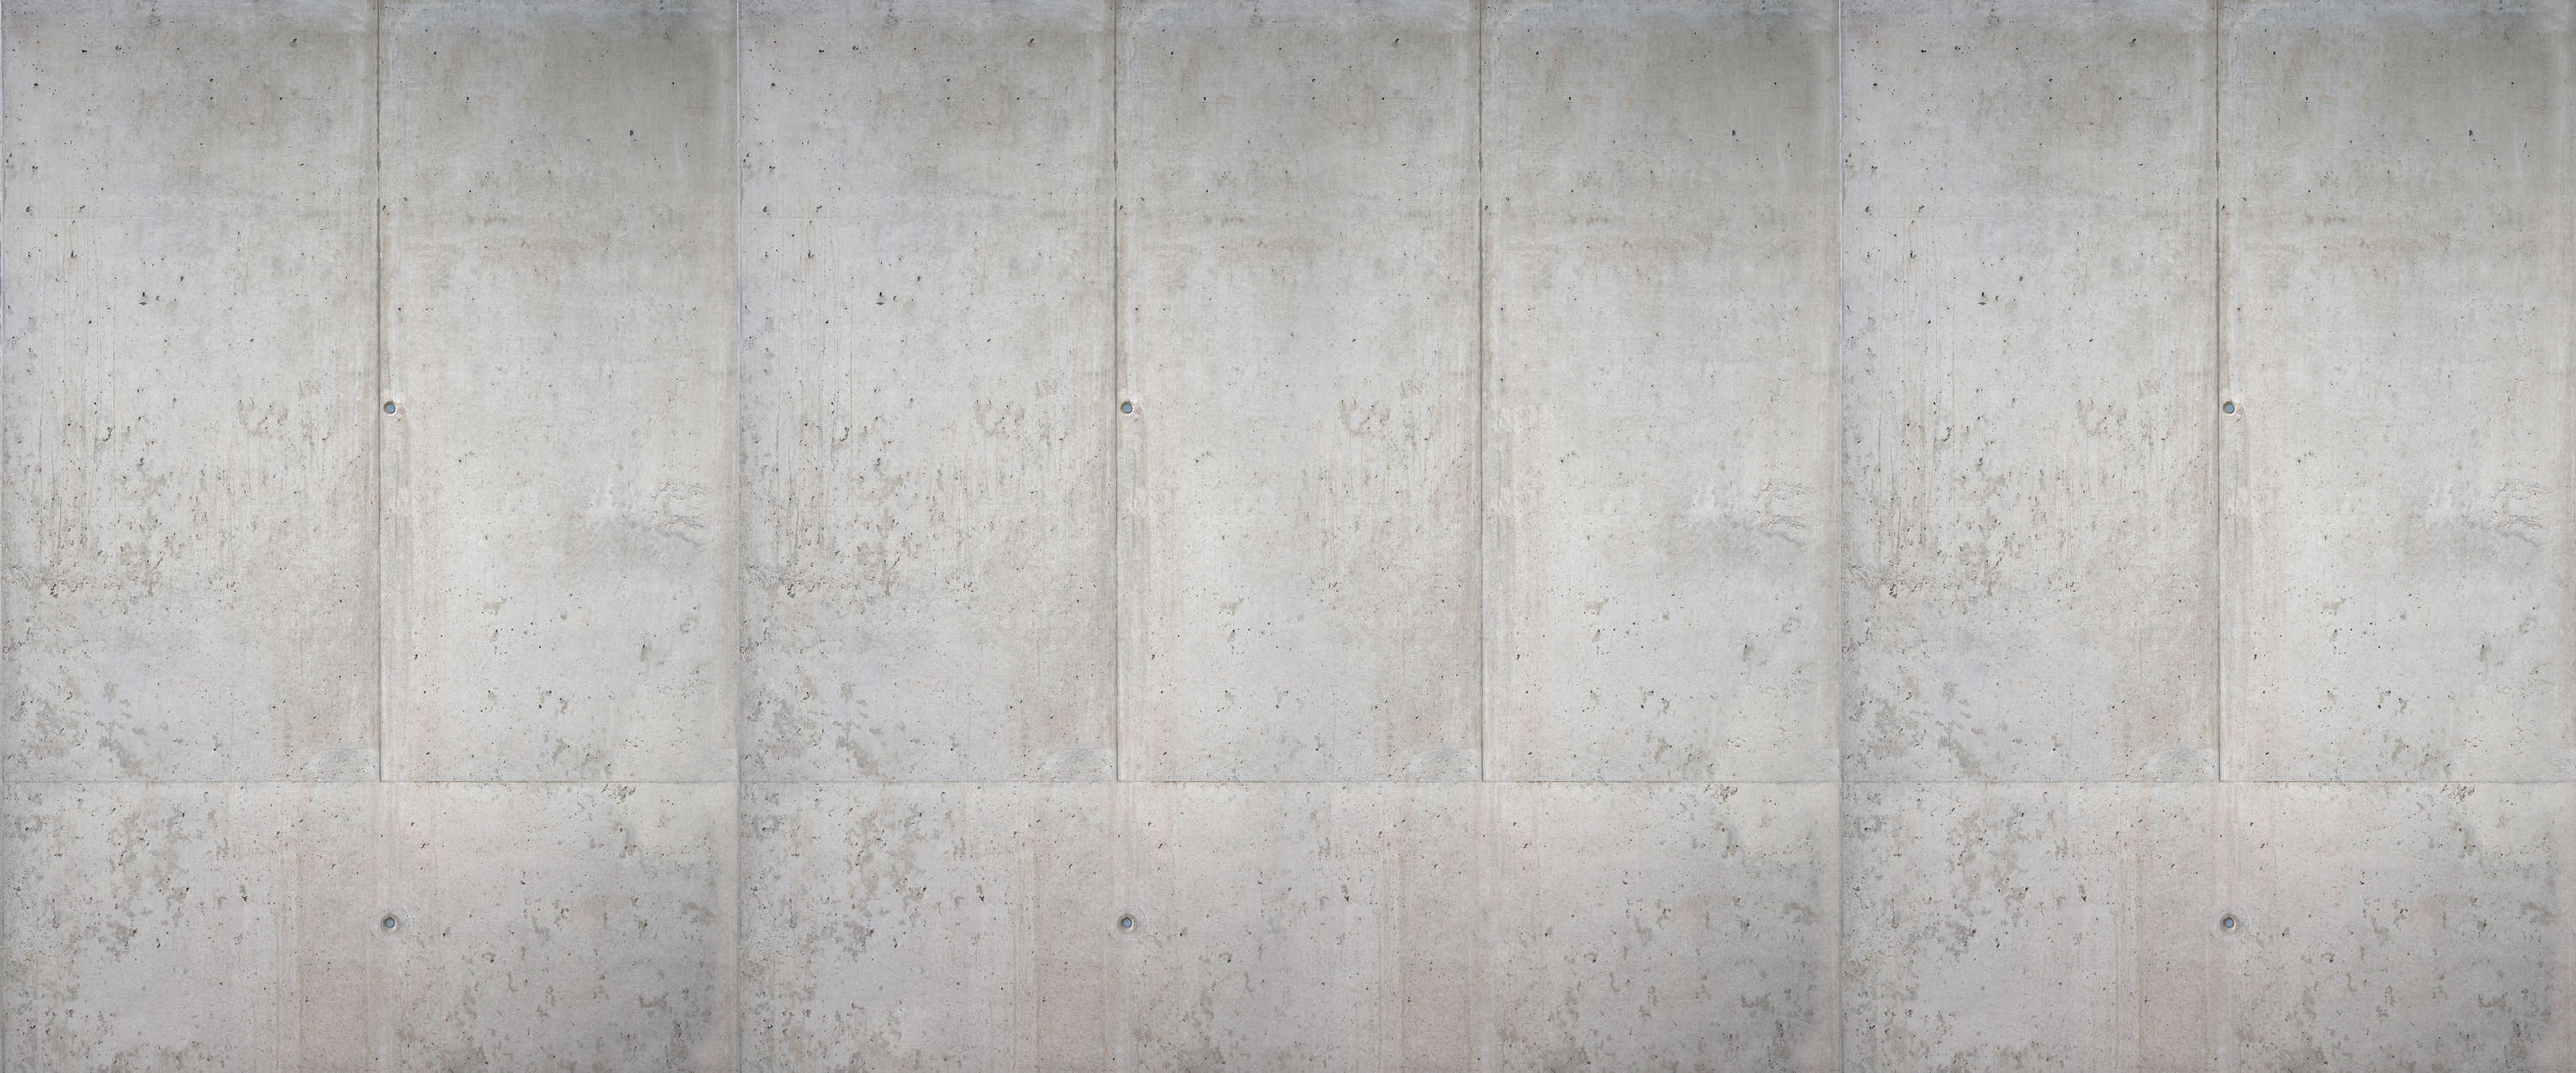             Betonnen muur muurschildering Blootgestelde betonnen muur in industriële stijl
        